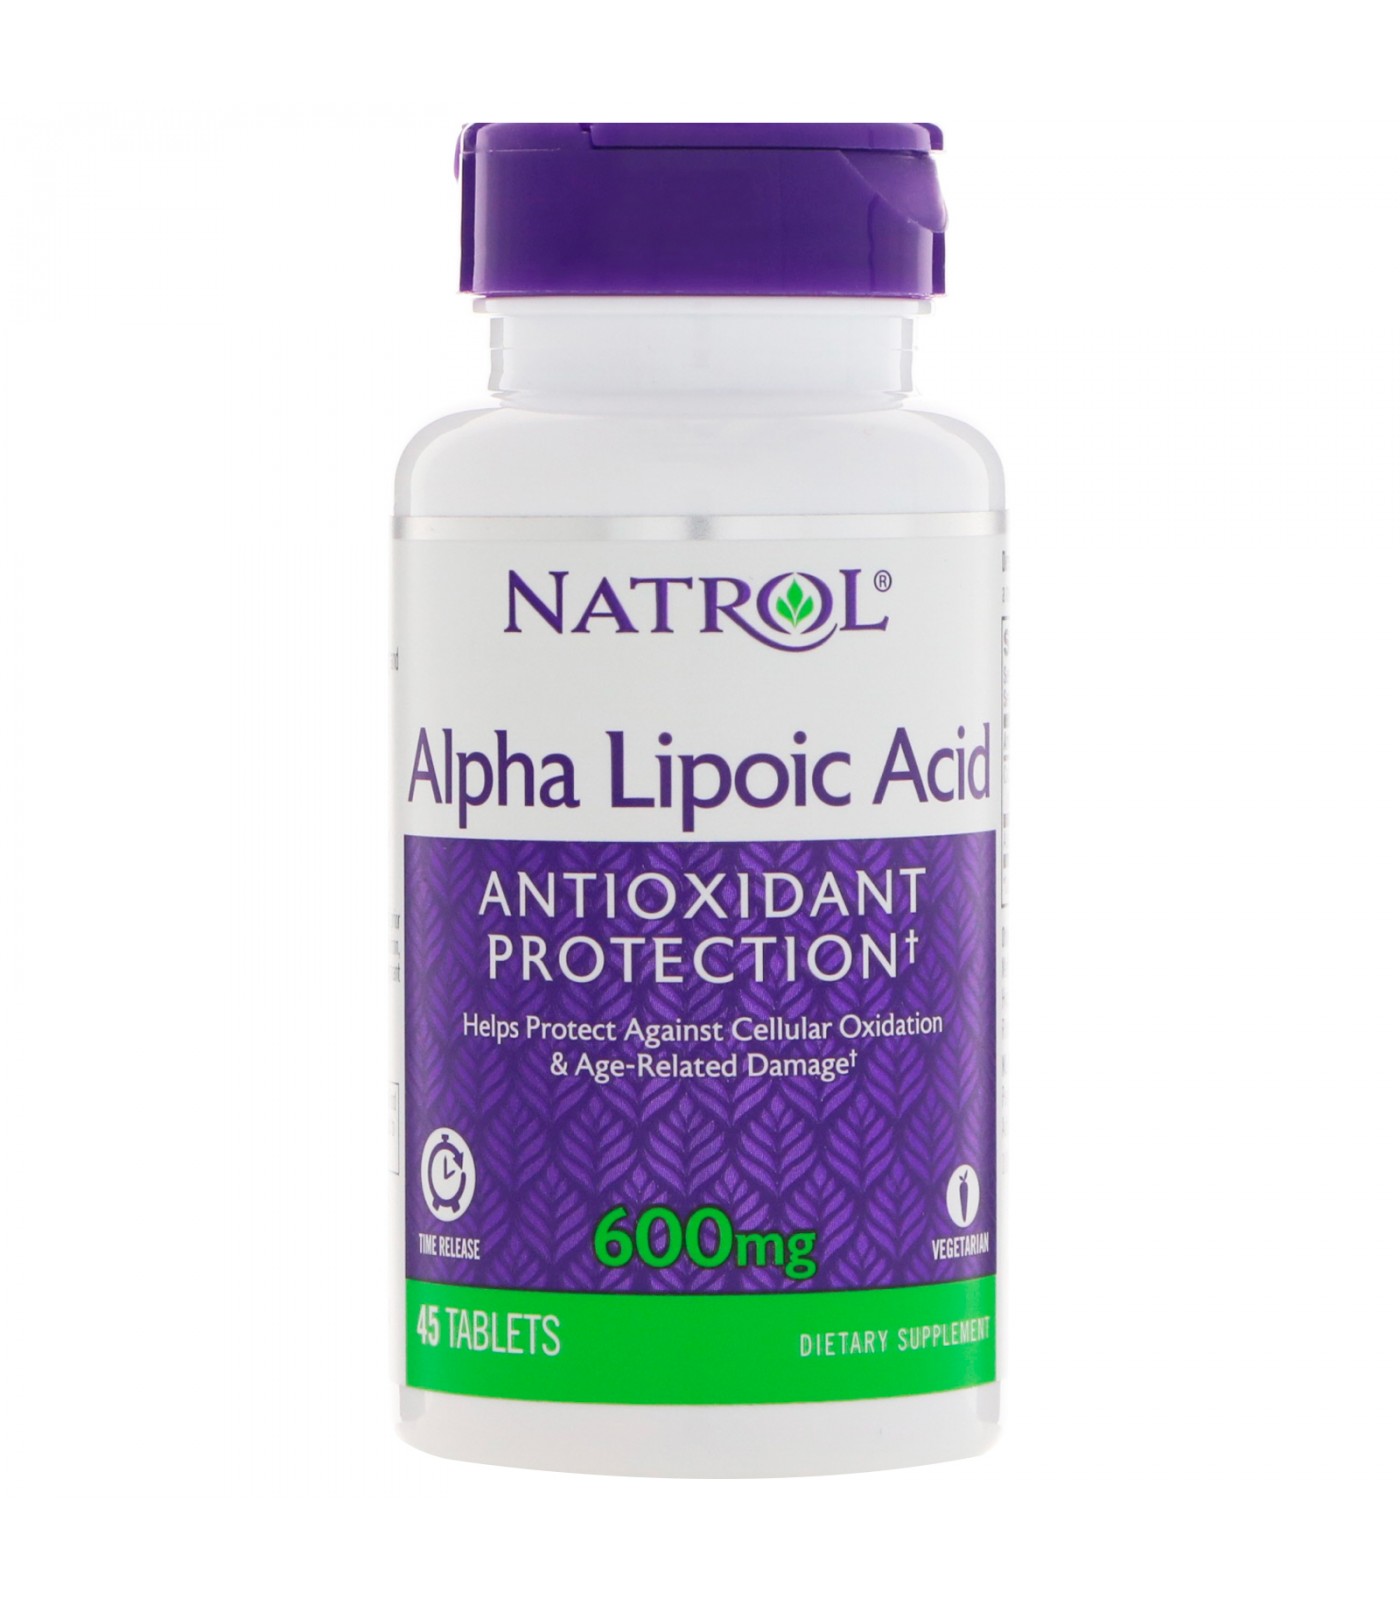 Natrol - Alpha Lipoic Acid 600mg - Time Release / 45 tabs